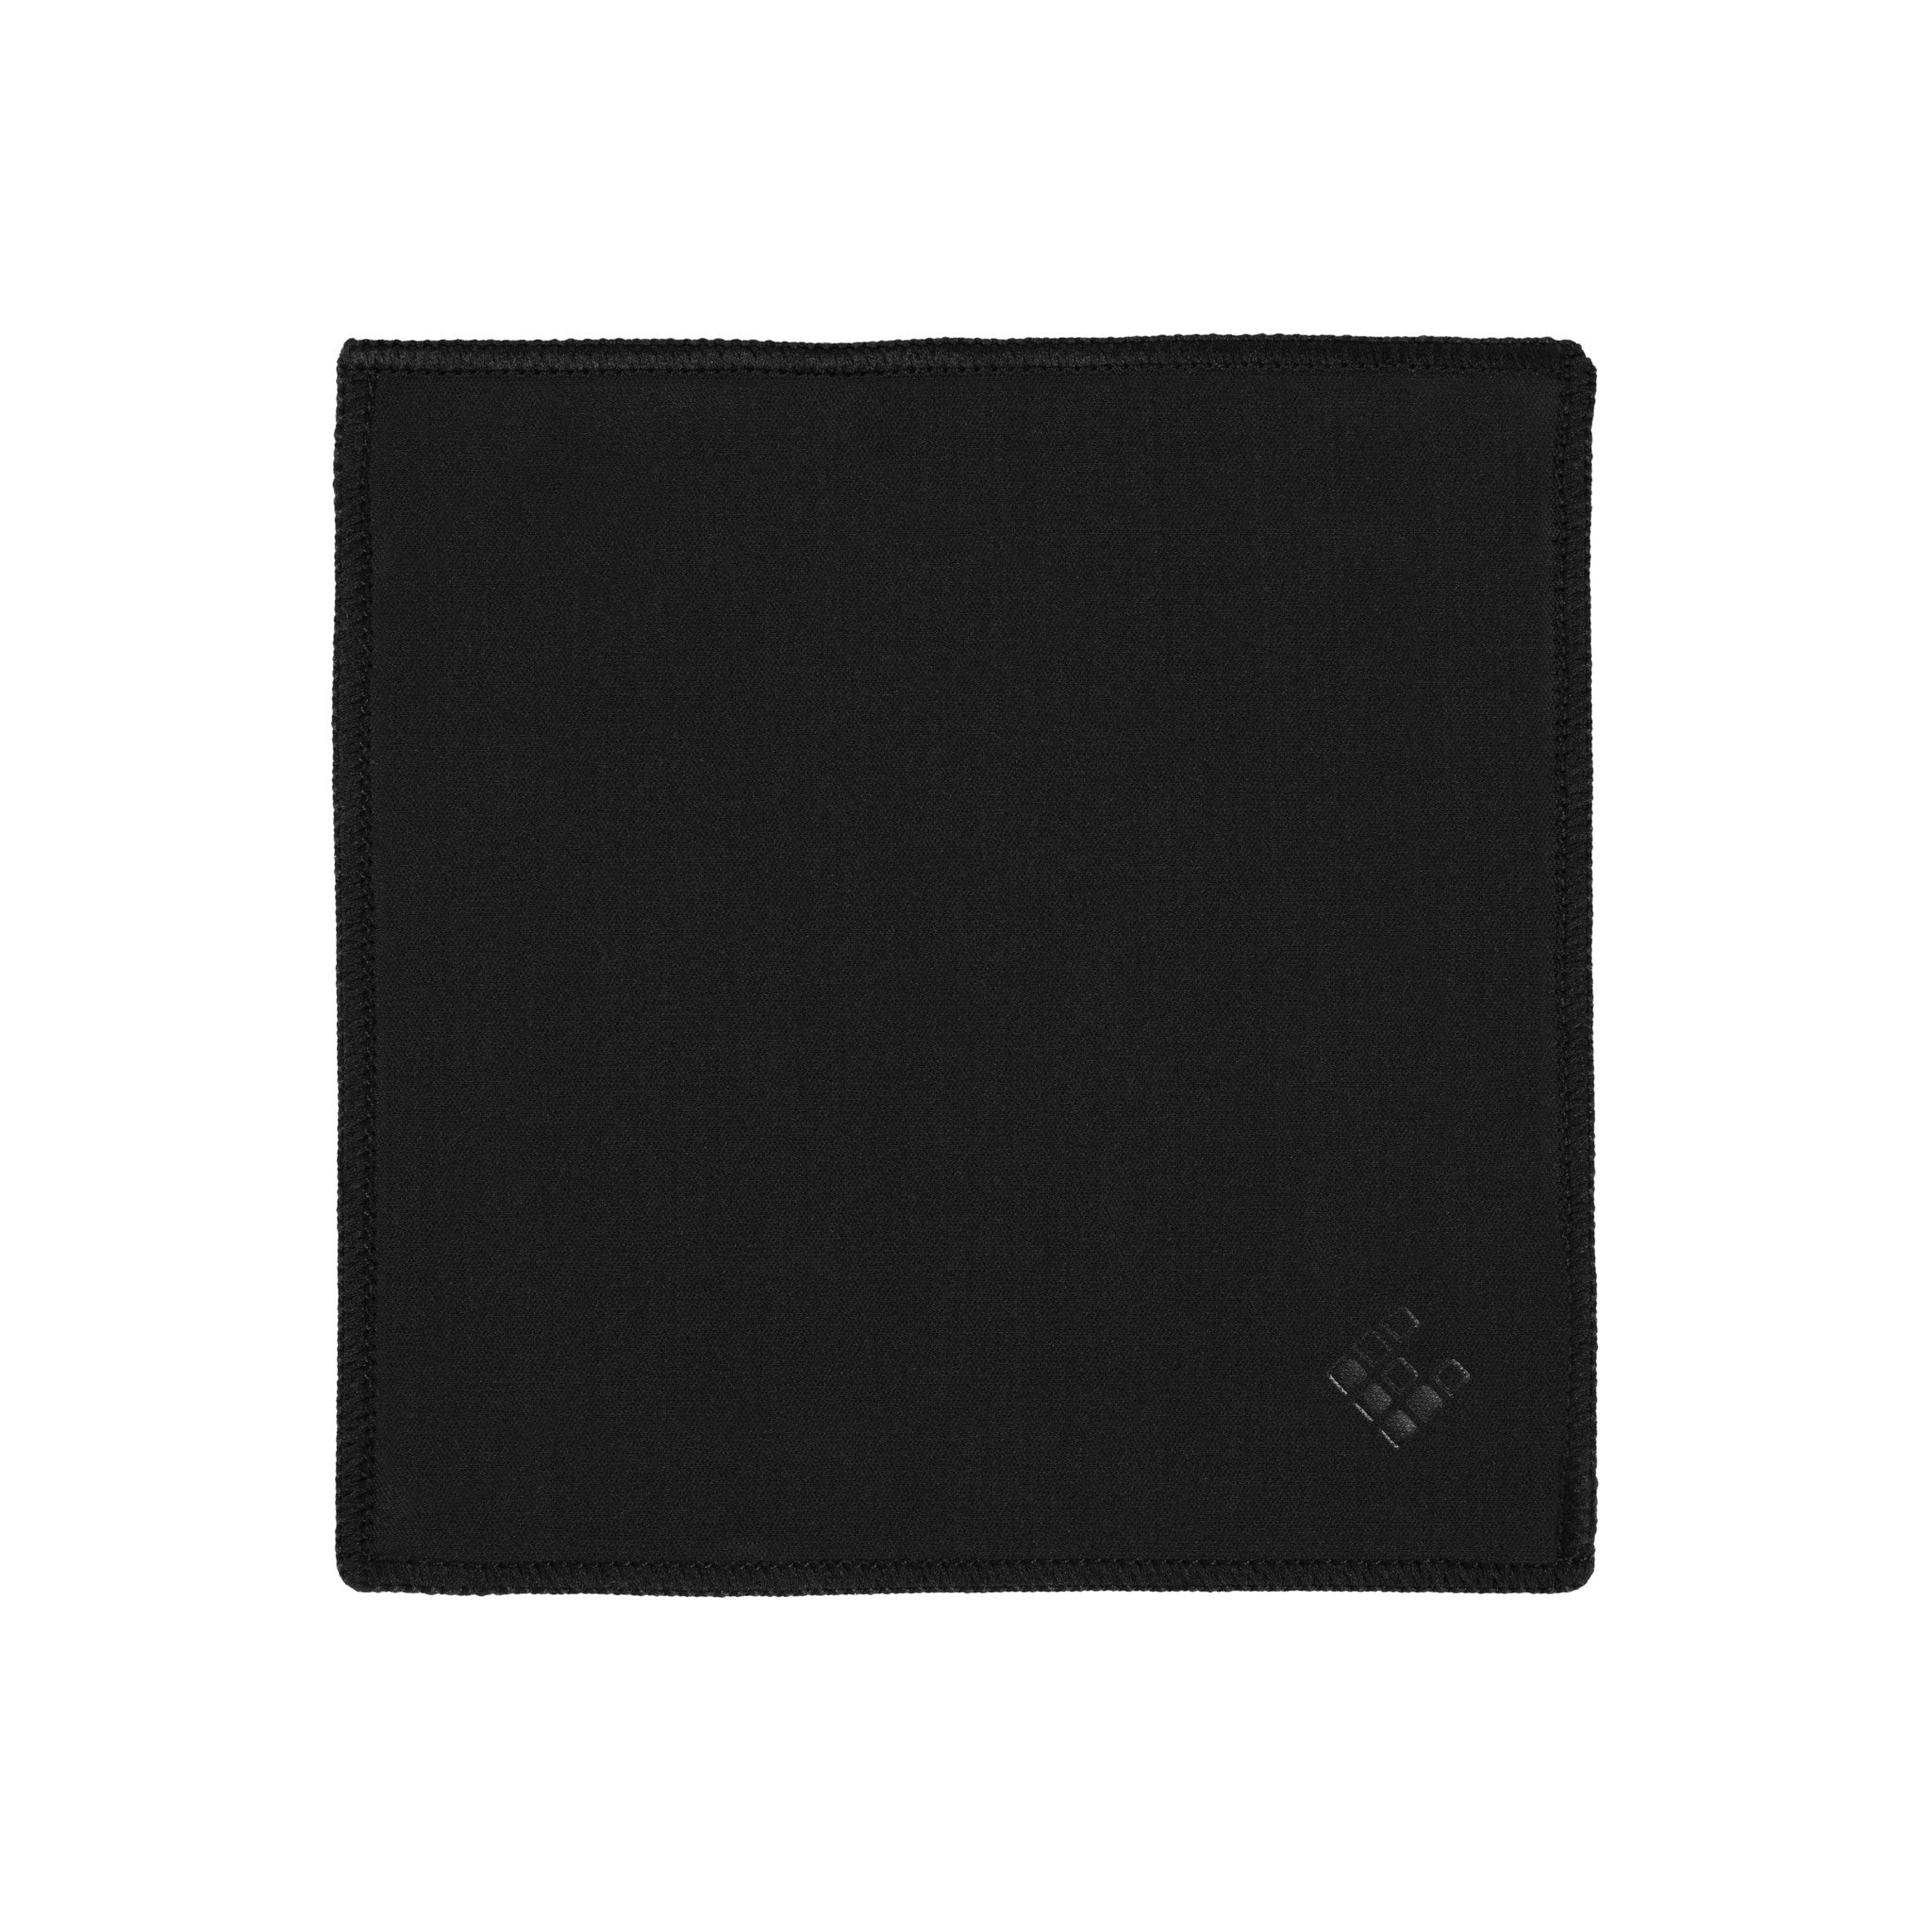 Latercase Black Microfiber Cloth - Premium microfiber cleaning cloth